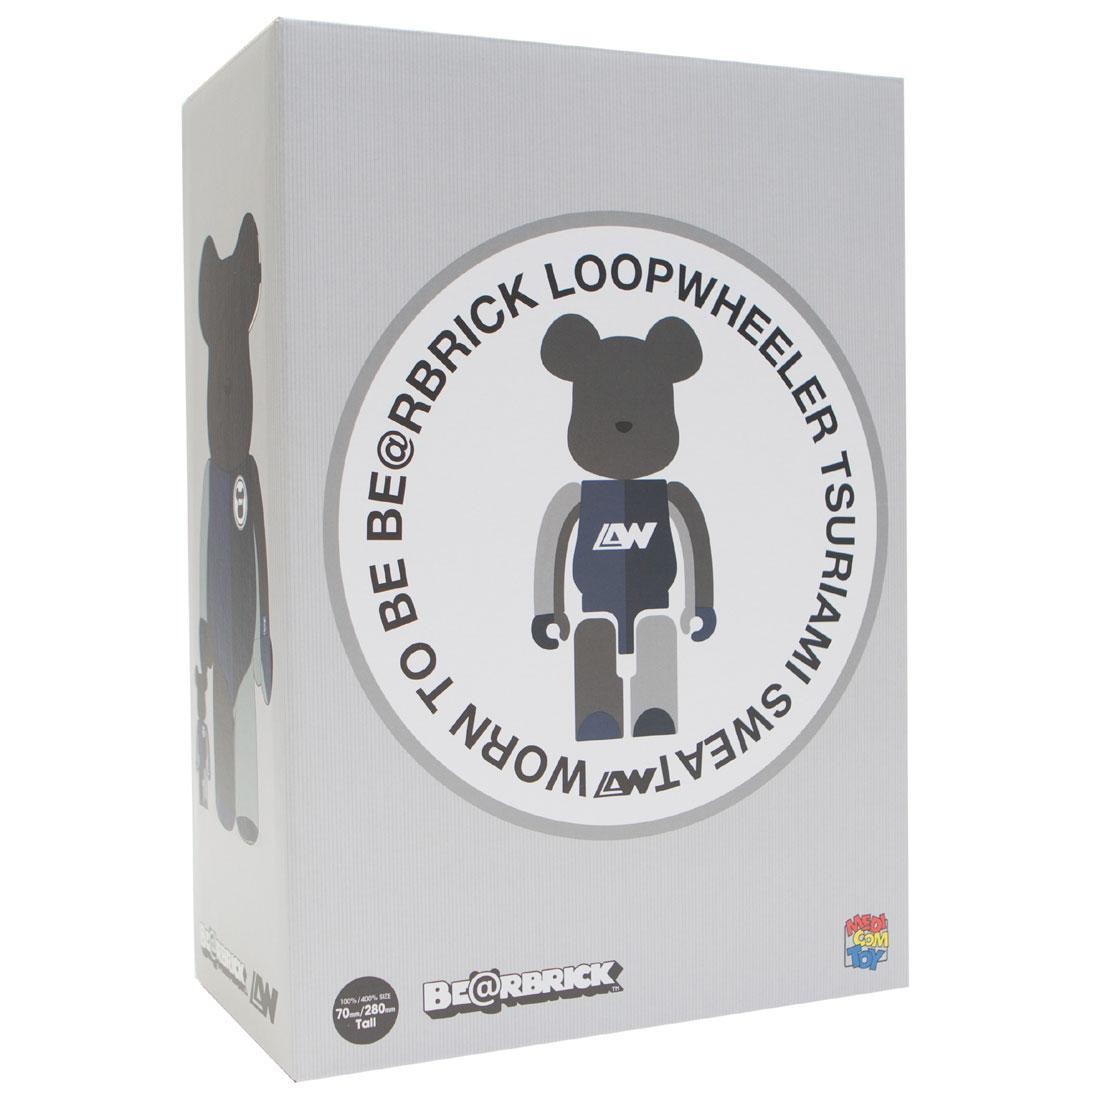 Medicom Loopwheeler 100% 400% Bearbrick Set gray blue